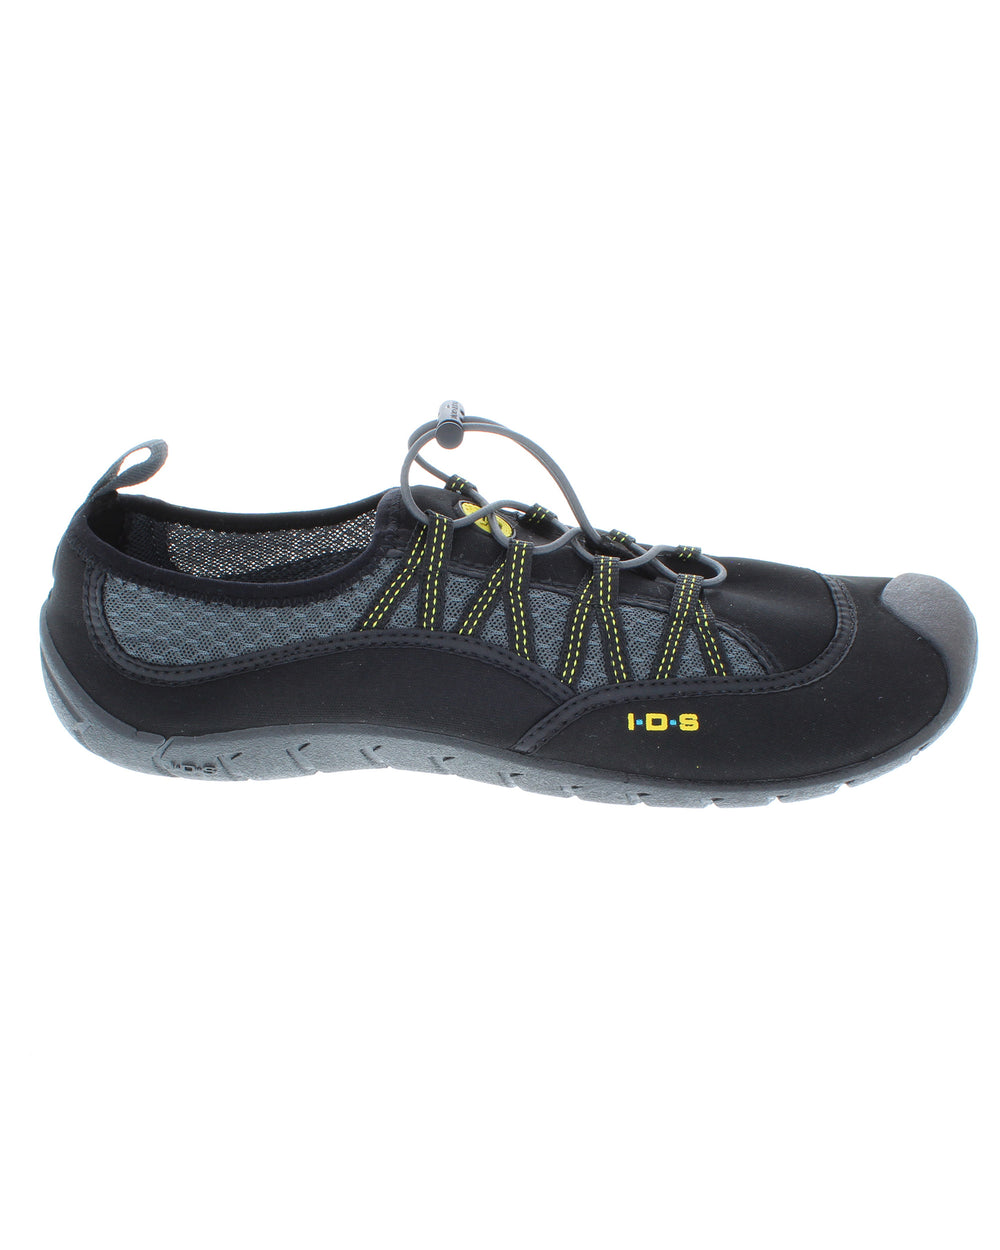 Men's Sidewinder Water Shoes - Black/Yellow